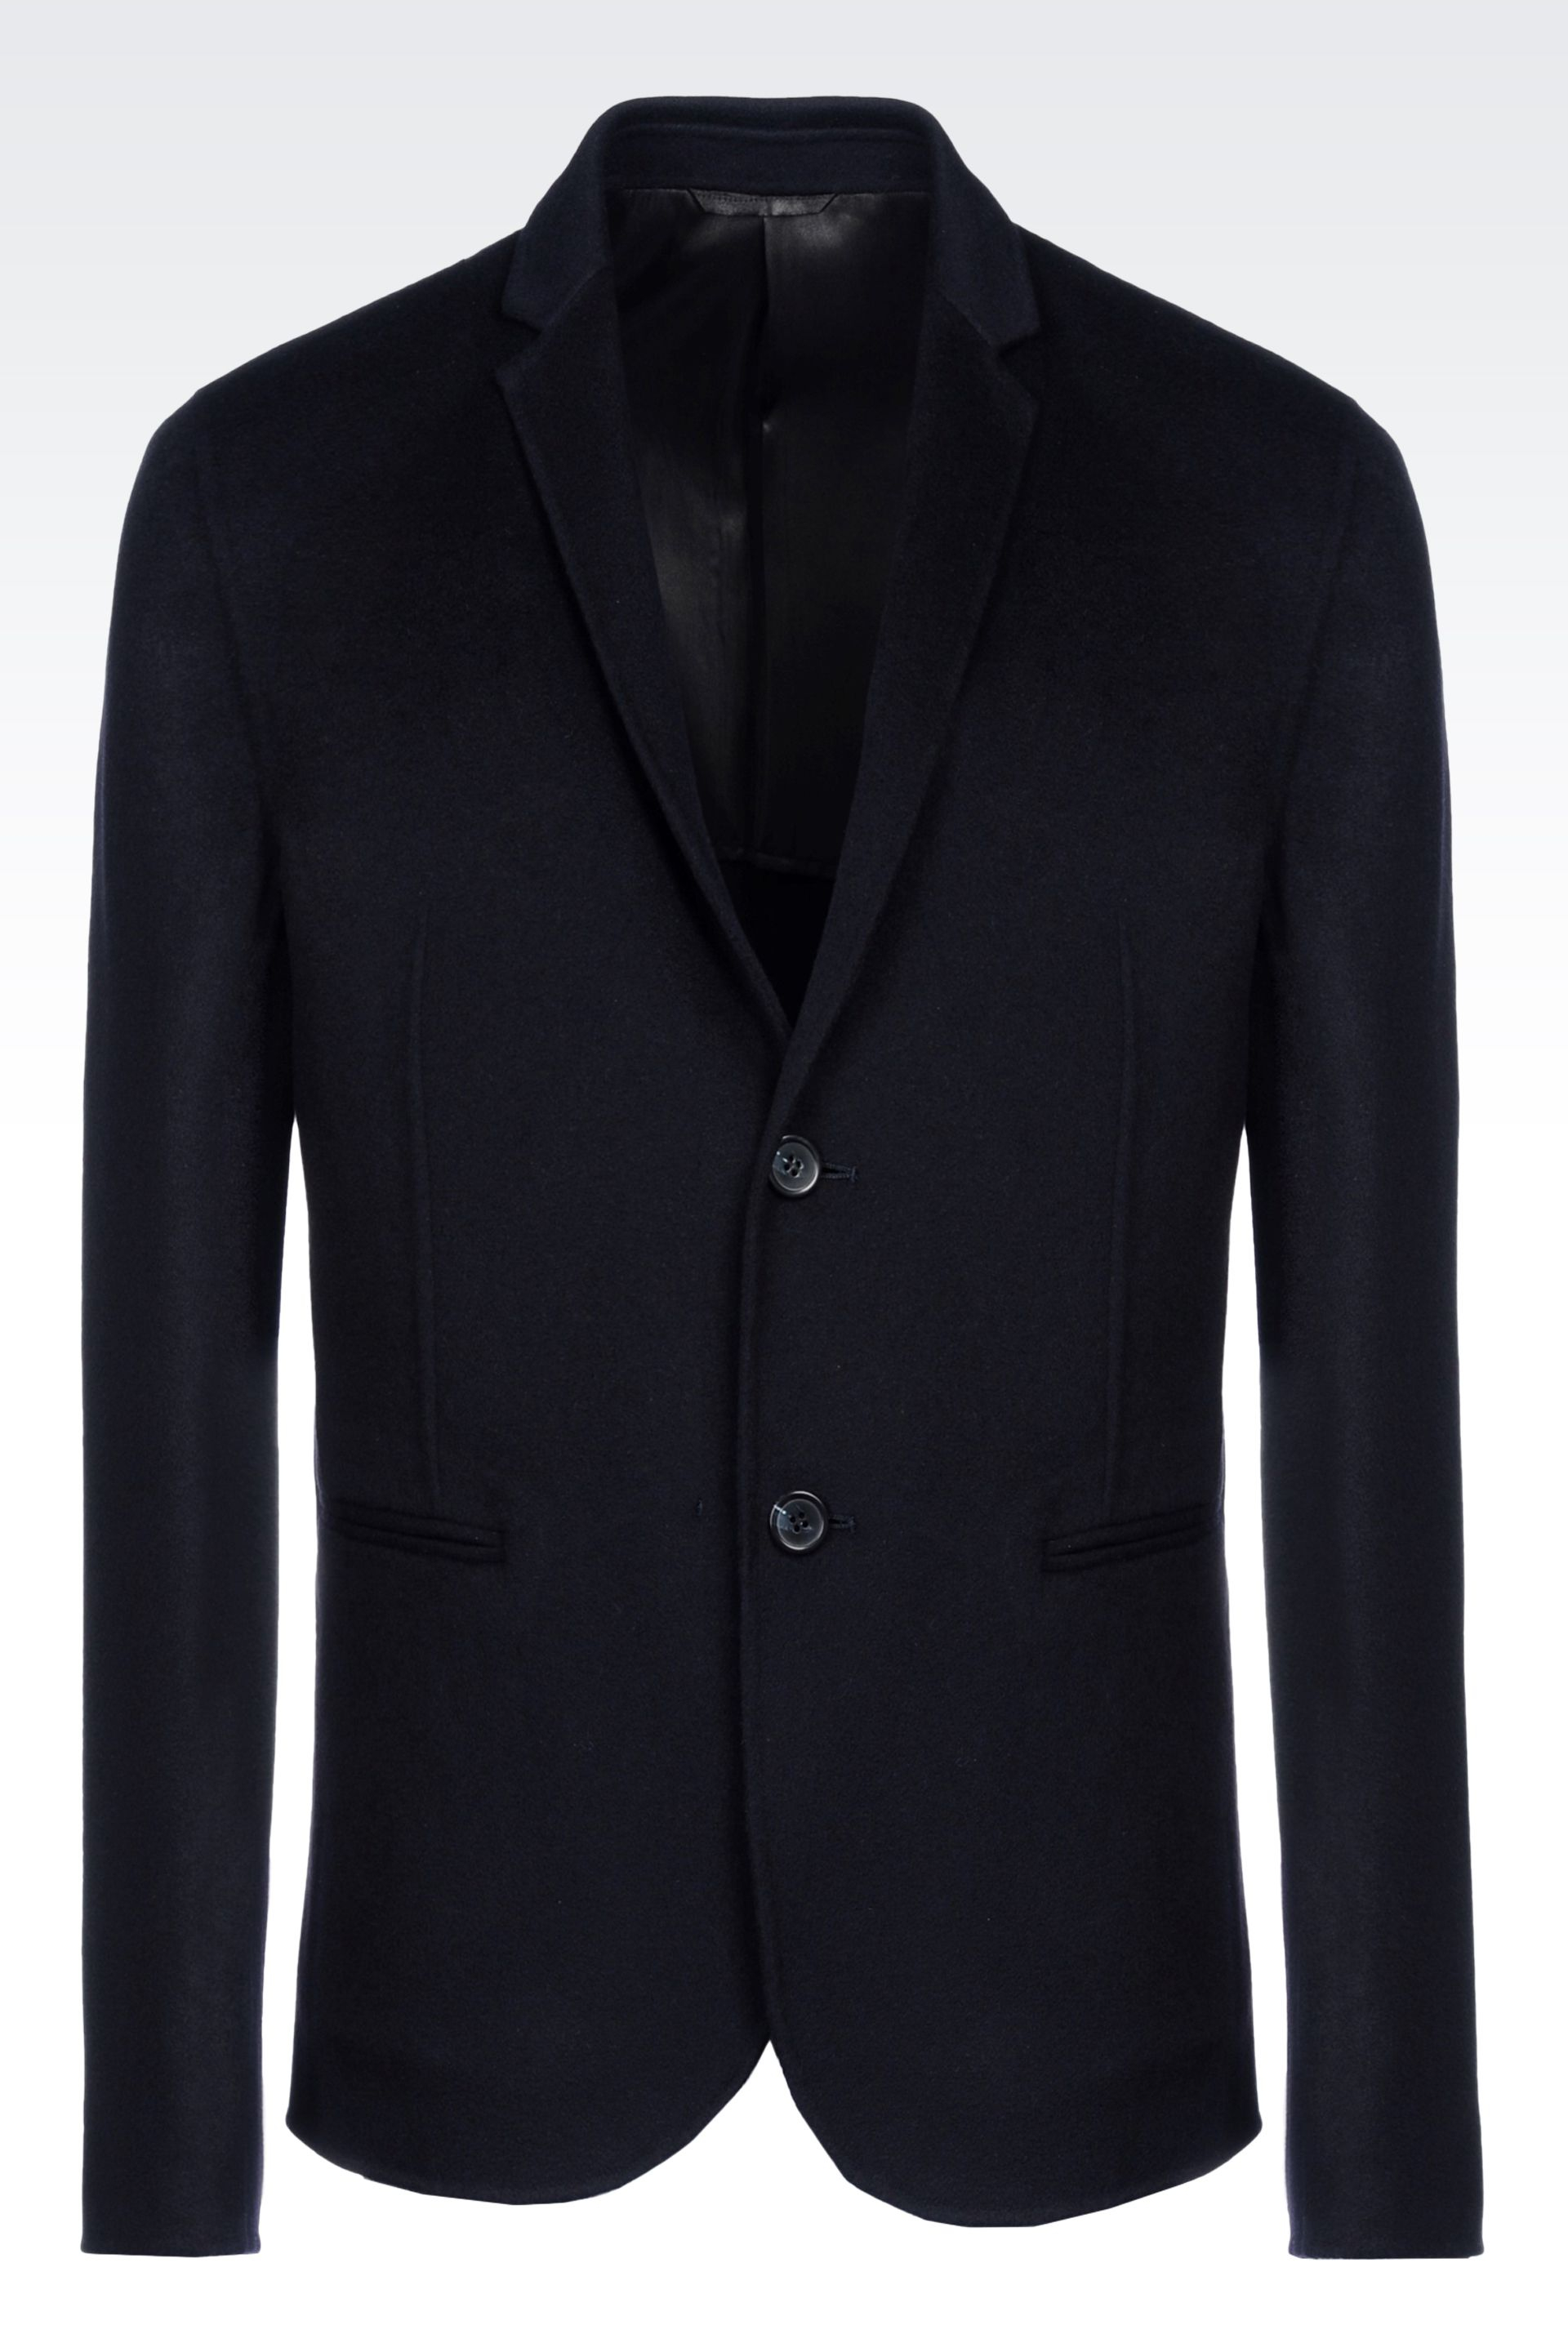 Emporio armani Cashmere Jacket in Black for Men | Lyst